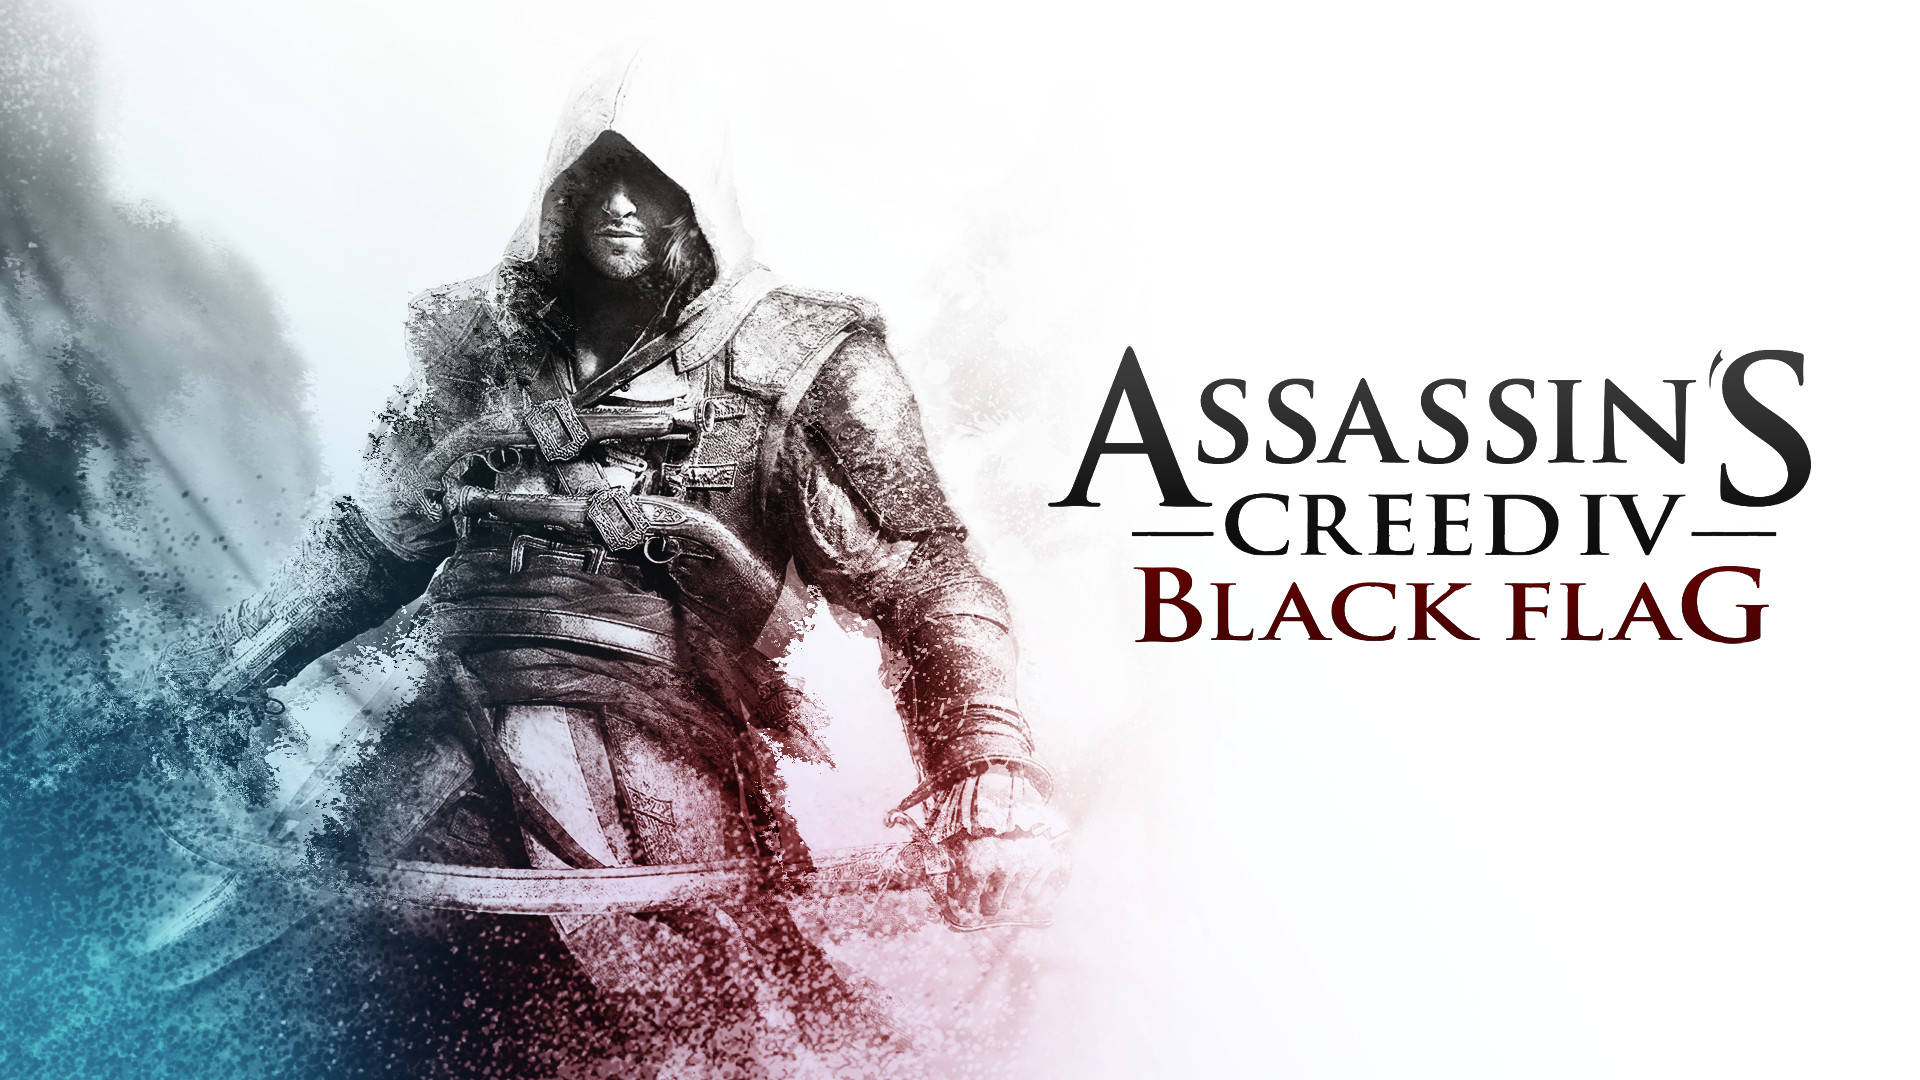 Imagens De Assassin's Creed Black Flag